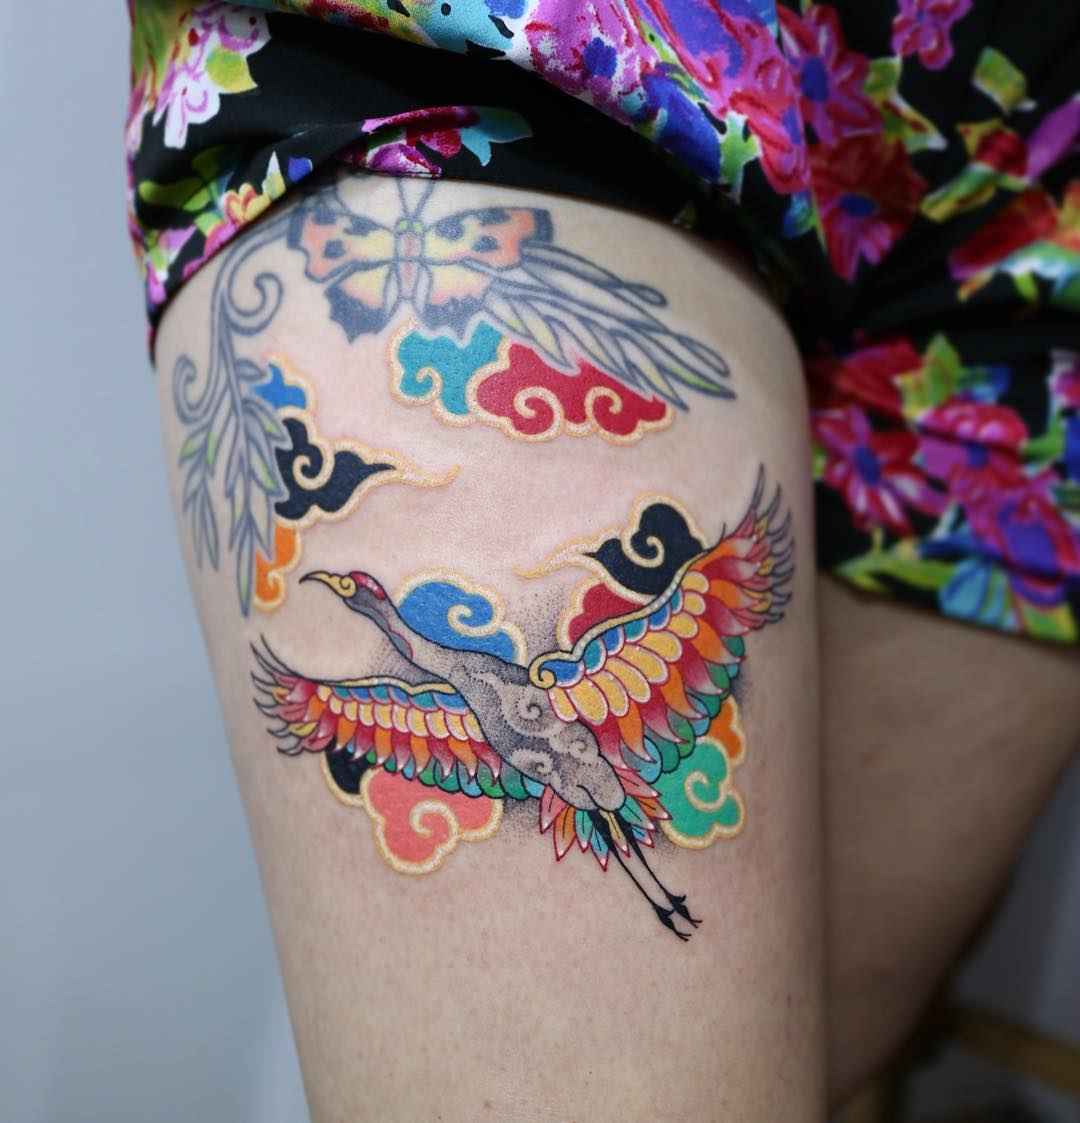 Tattoo artiest Pitta kleur Koreaanse traditionele tatoeage, auteurs stijl | Seoul, Zuid-Korea